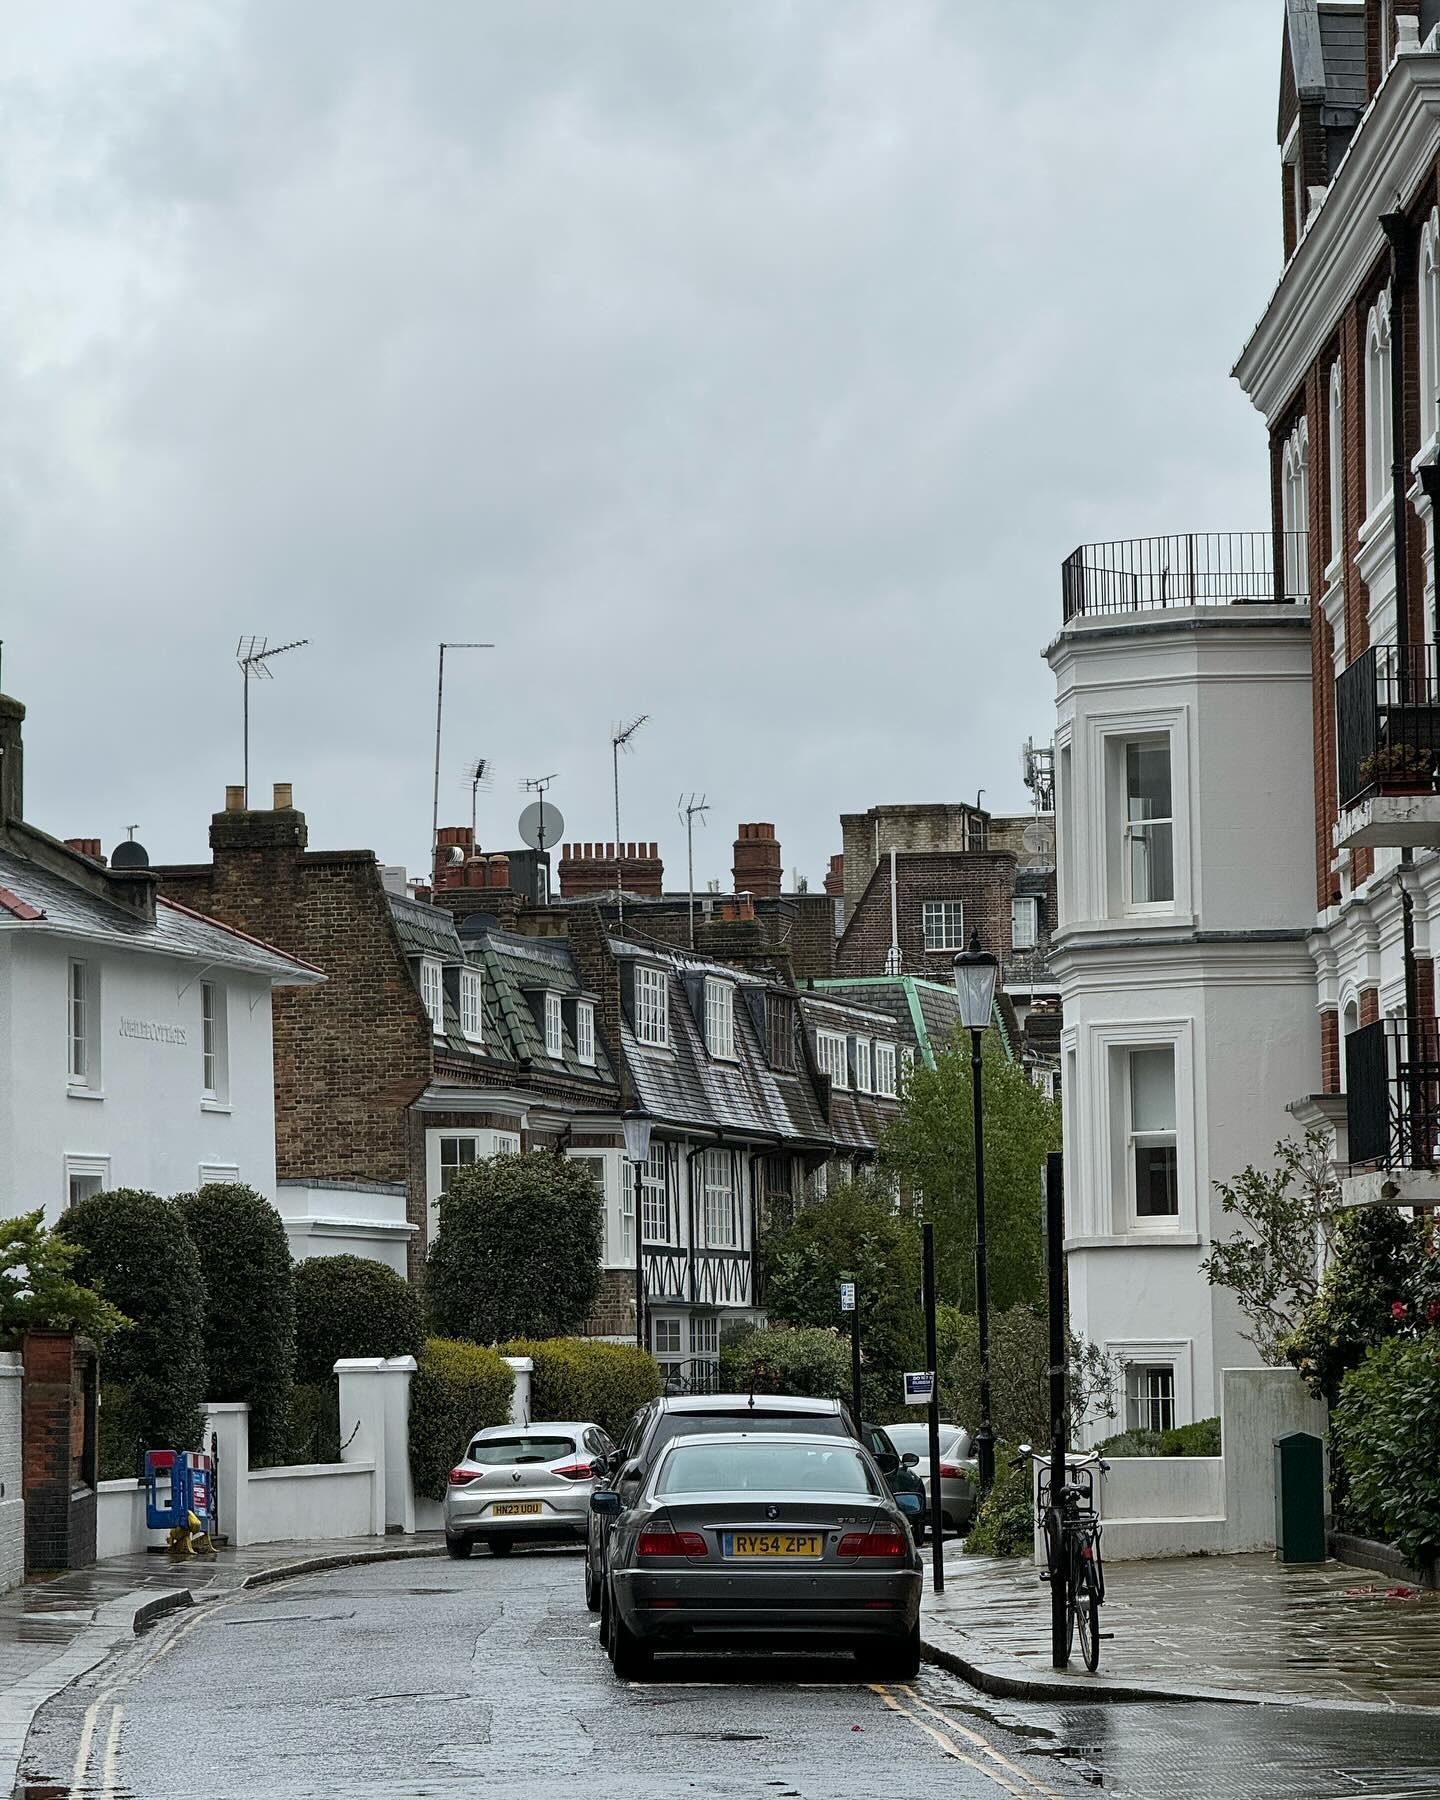 Just walking Chelsea, London on a rainy morning 🌸 #khhtravels #cometravelwithkhh #chelsealondon